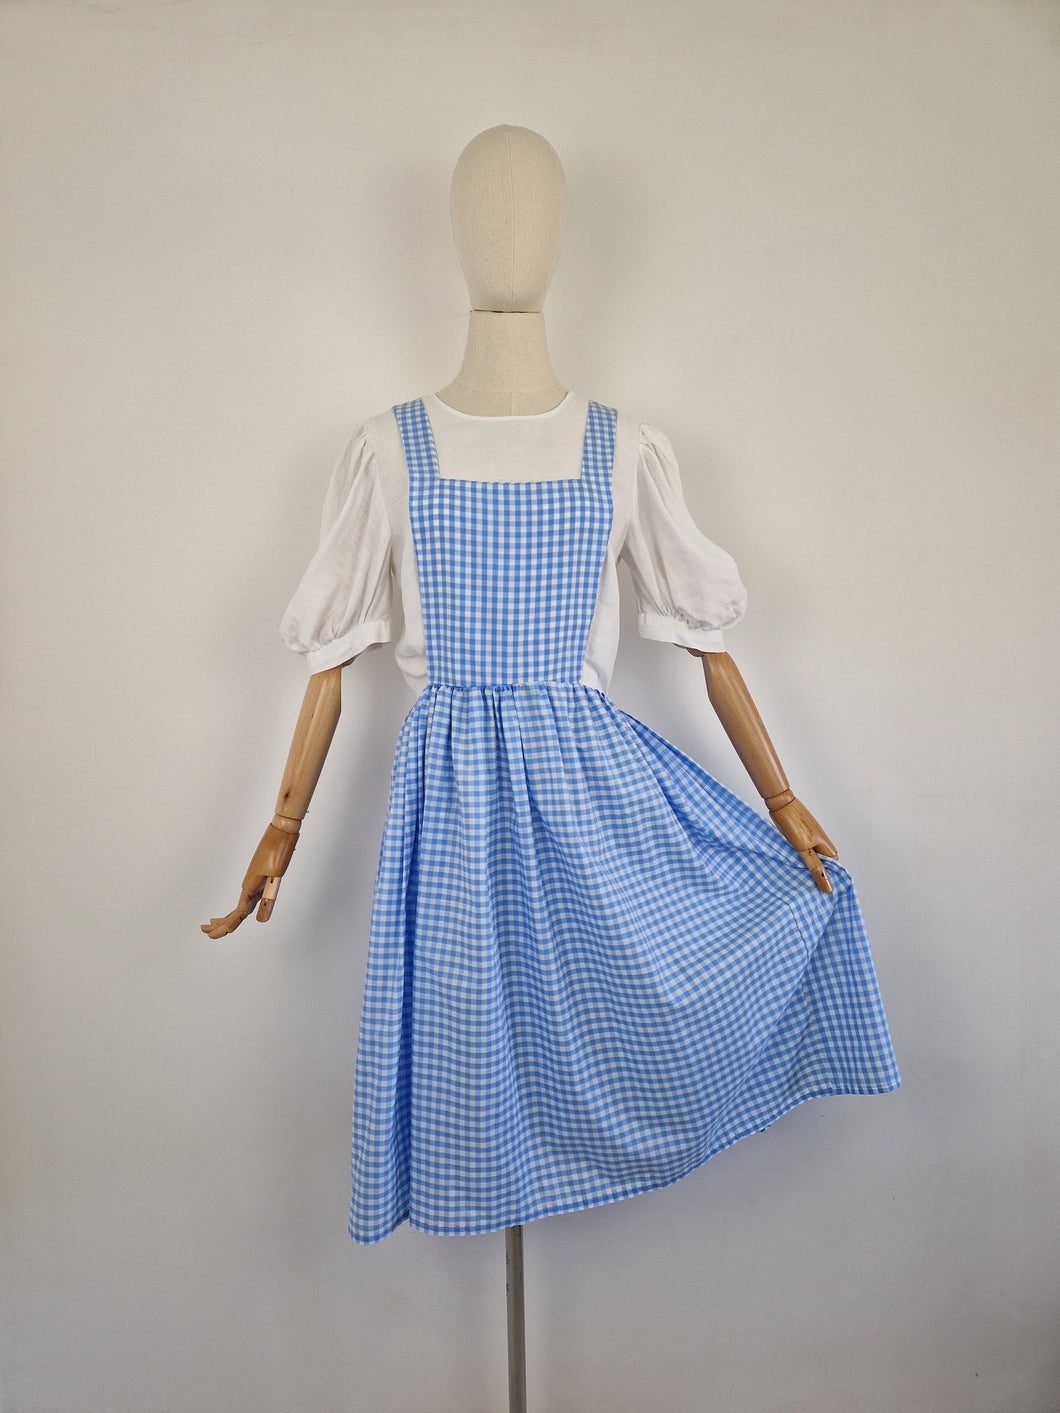 Vintage 80s gingham handmade dress